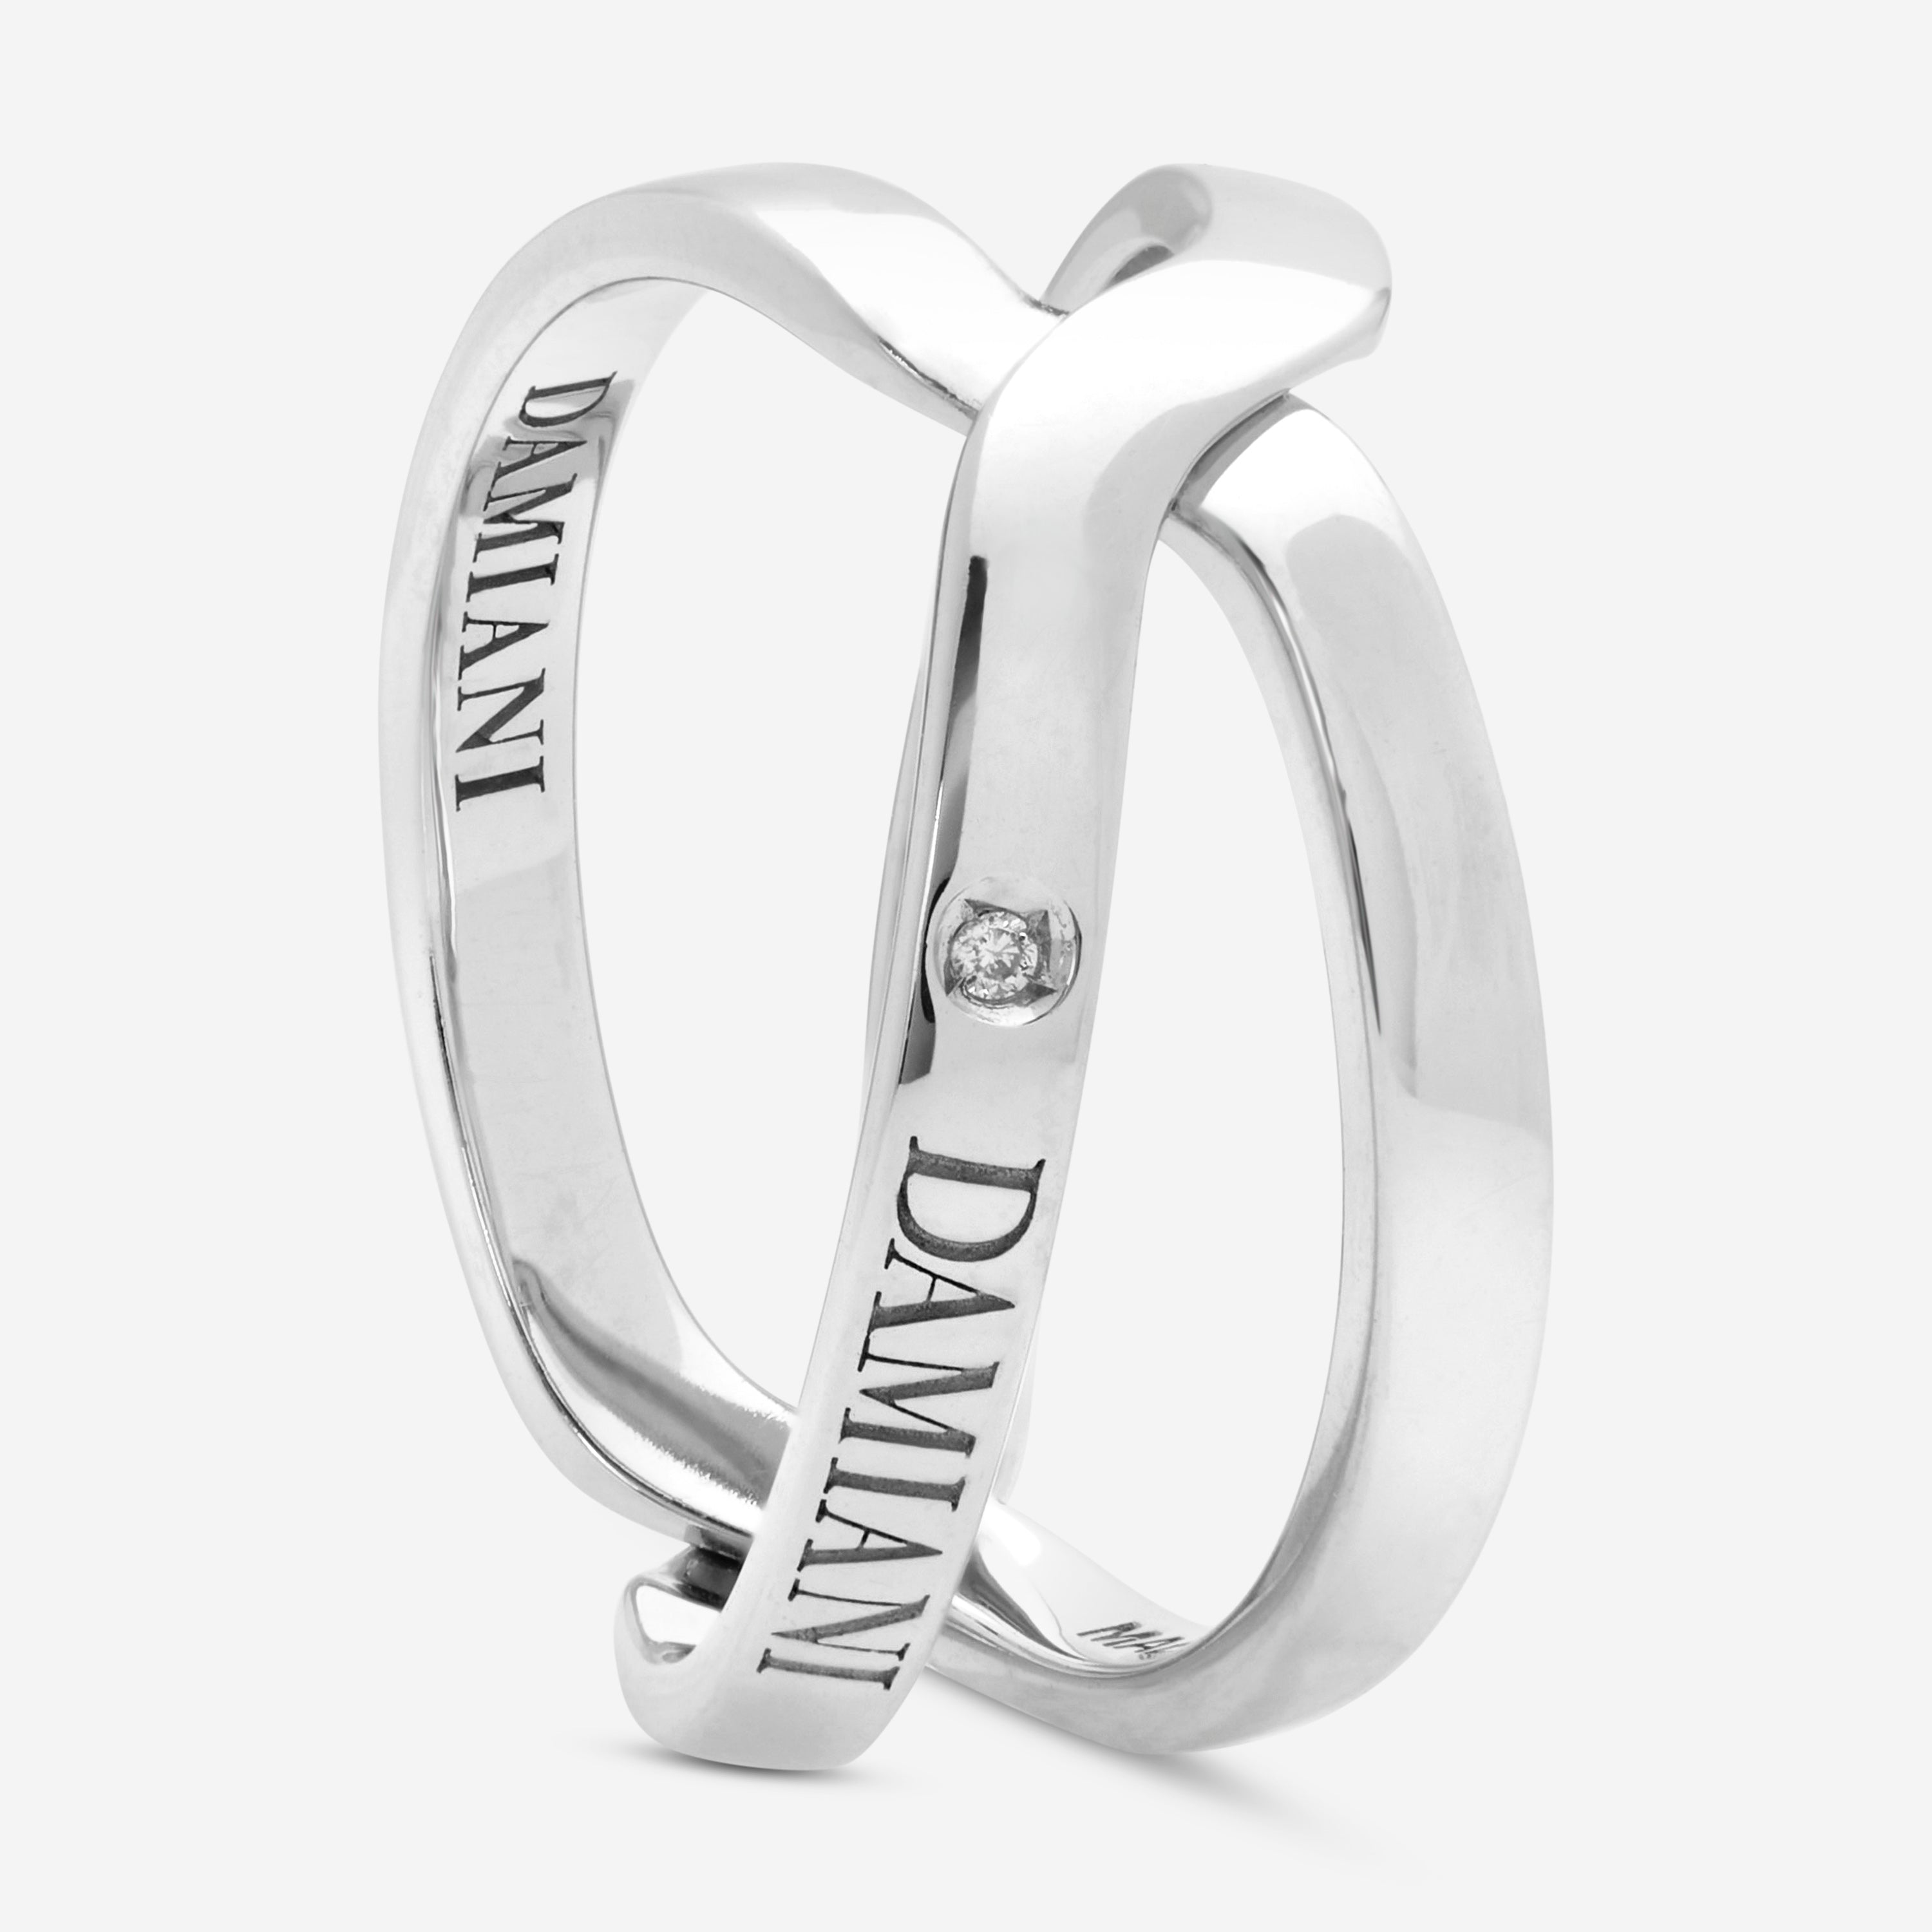 Damiani 18K White Gold, Diamond Interlocking Ring Sz. 5.5 320501 - THE SOLIST